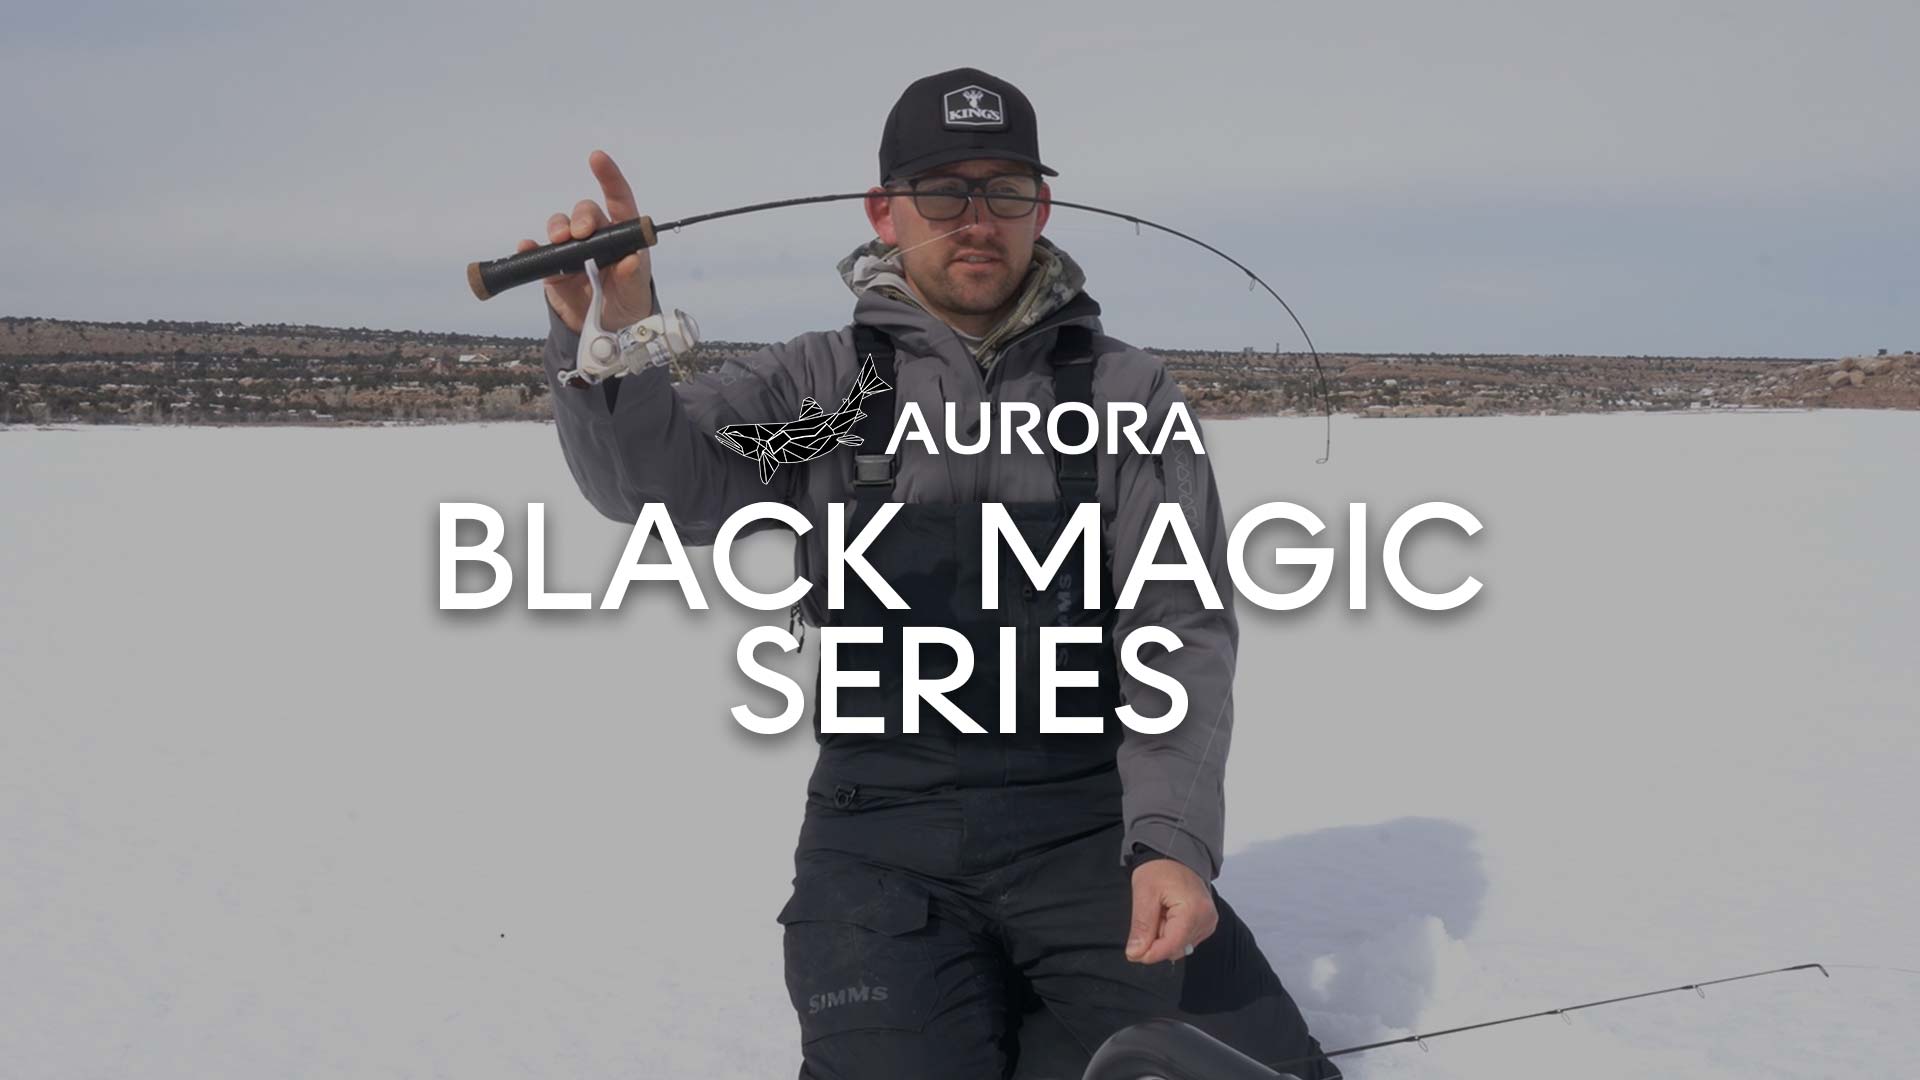 Load video: Black Magic Series